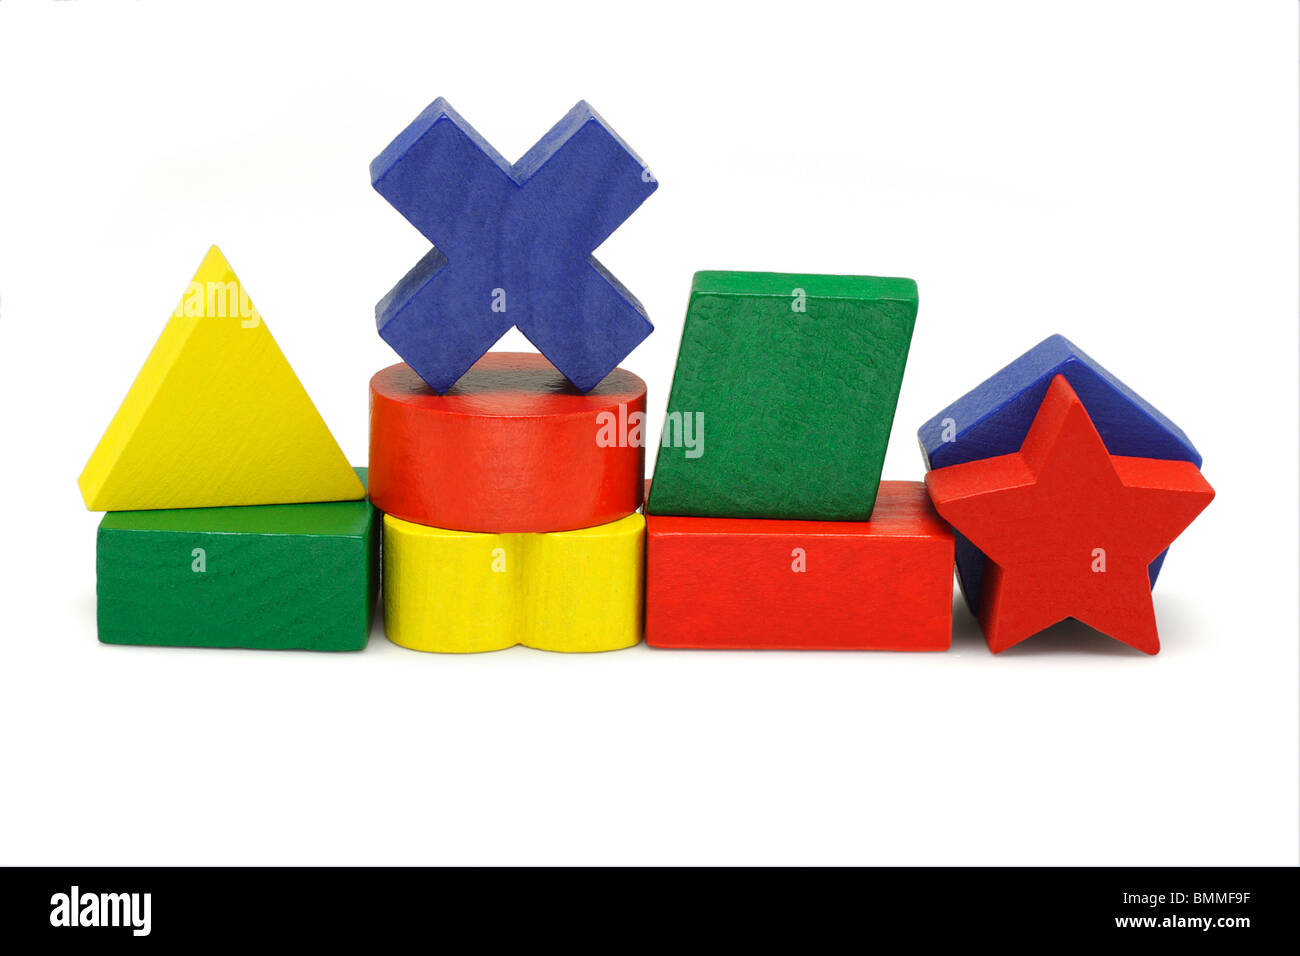 Wooden geometric toy blocks on white background Stock Photo